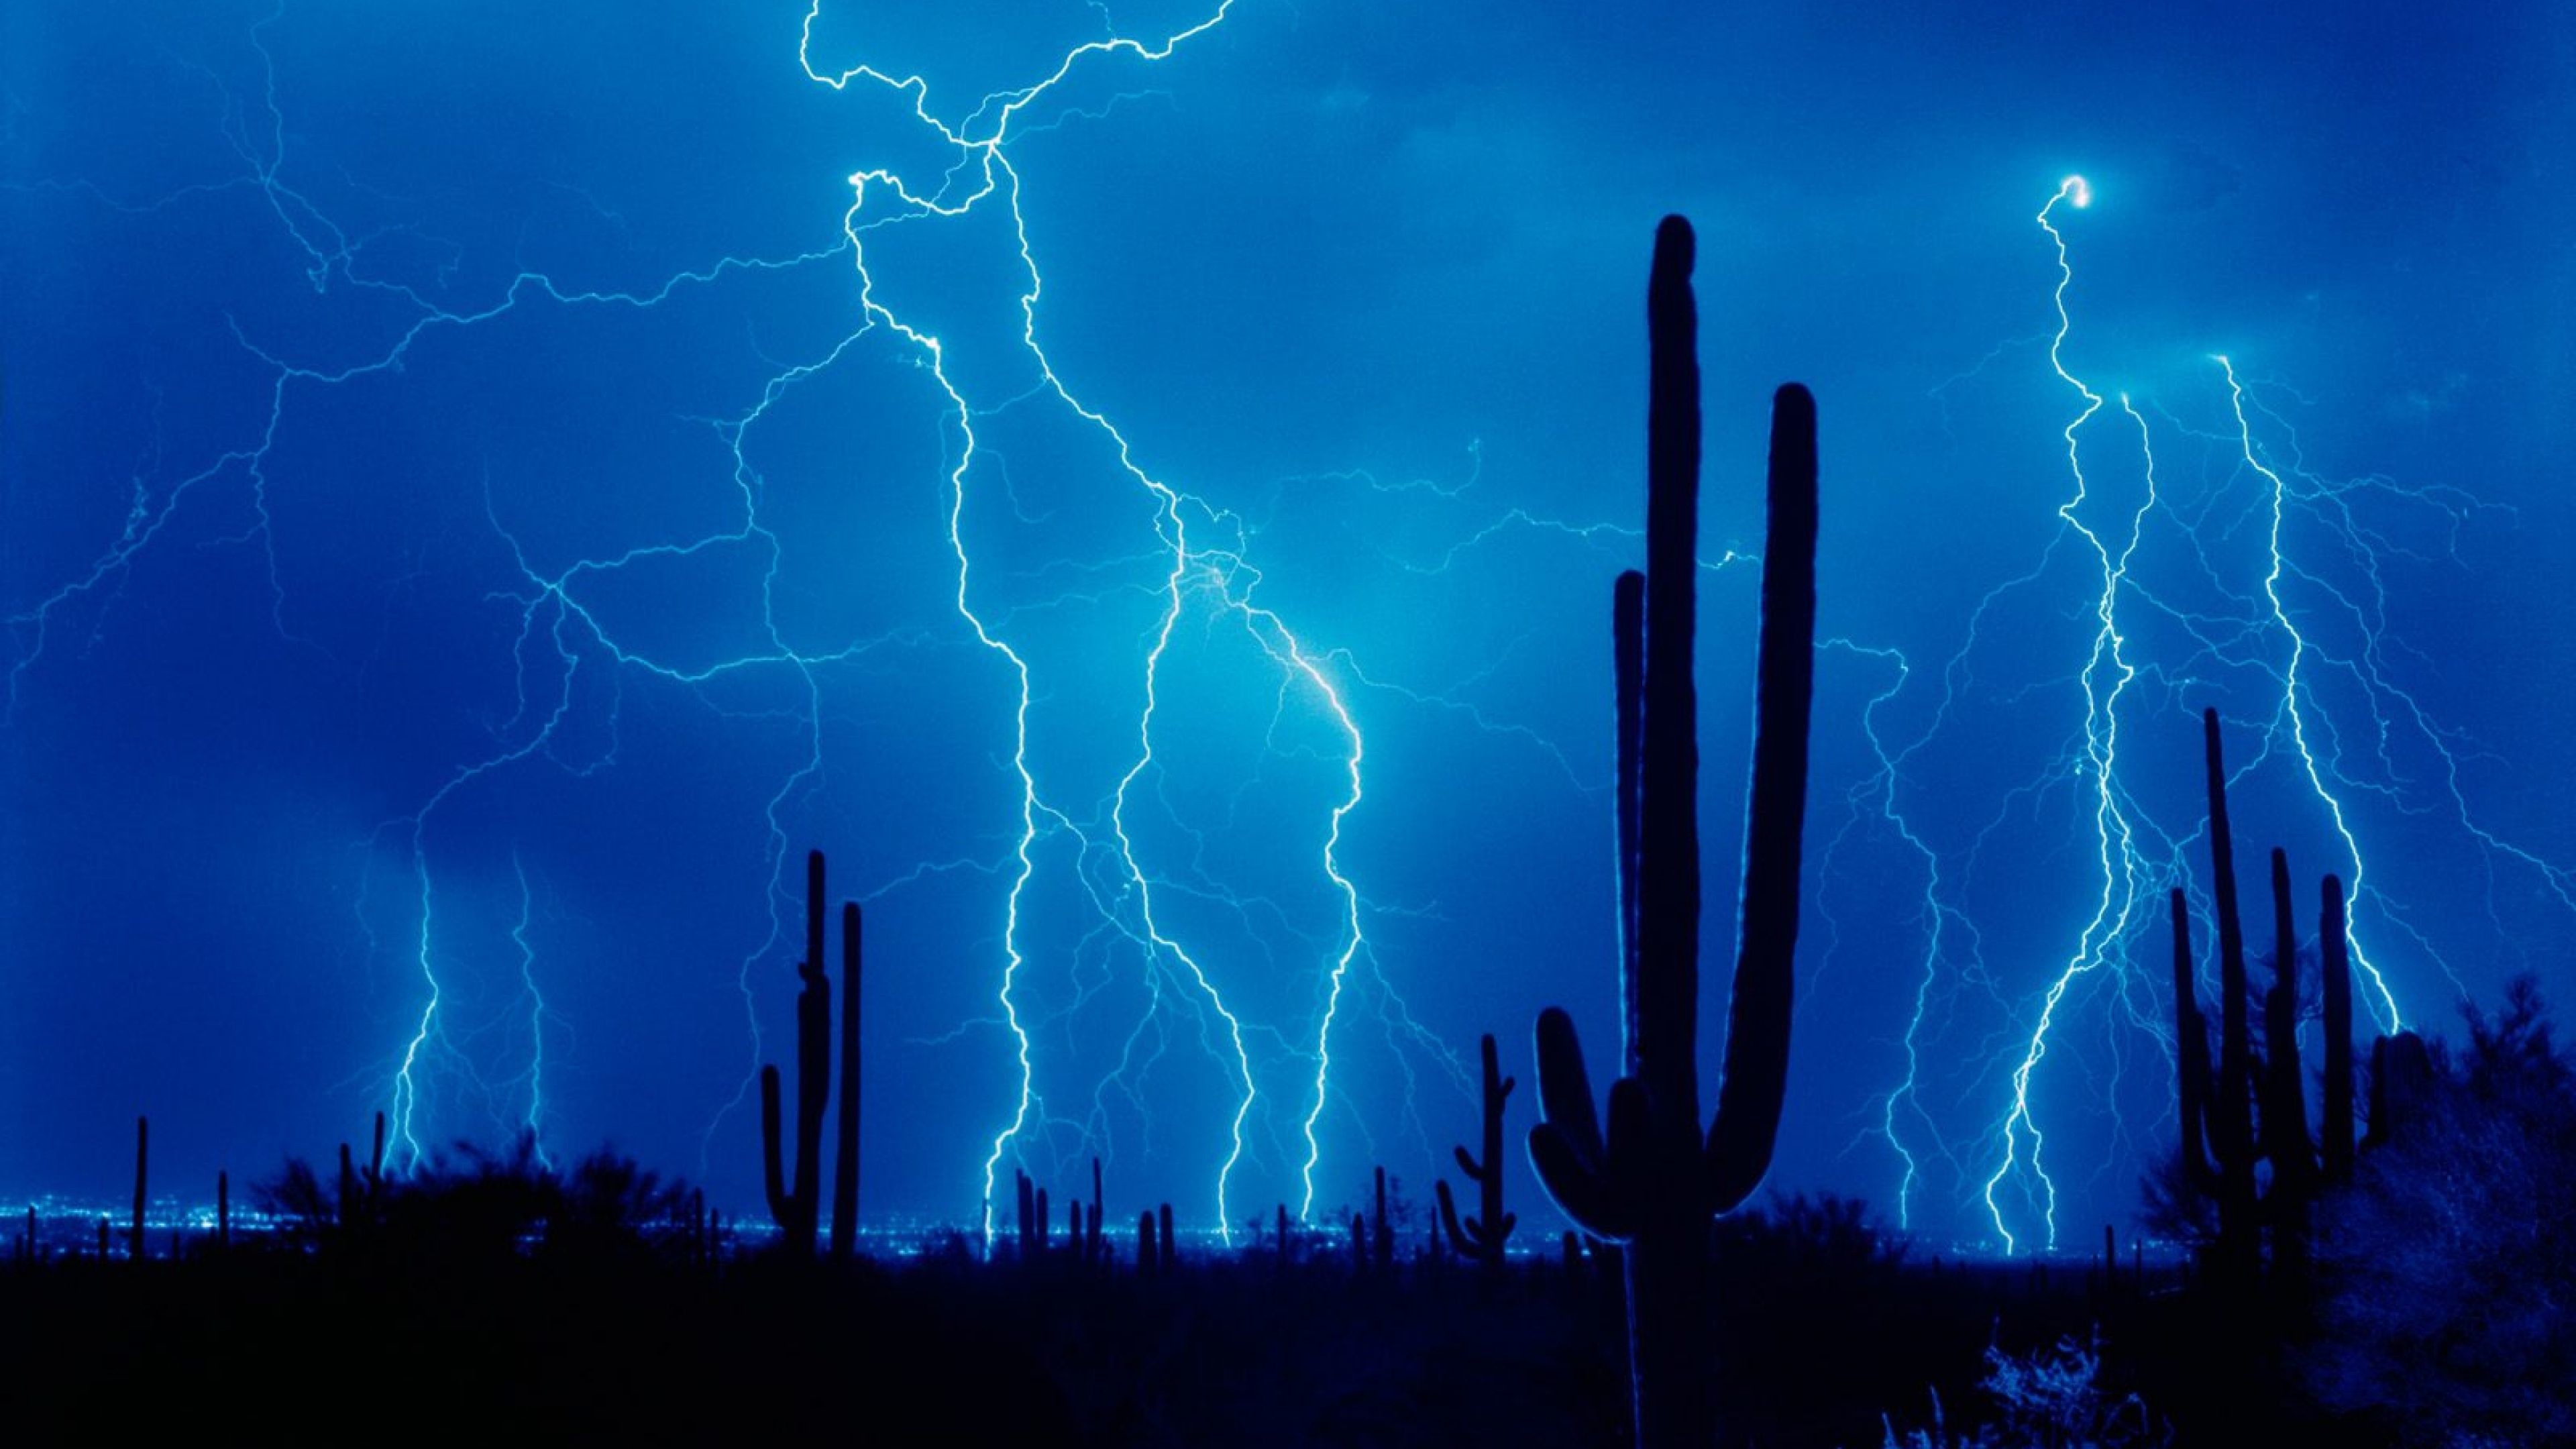 Download Wallpaper Lightning, Thunder-storm, Elements .